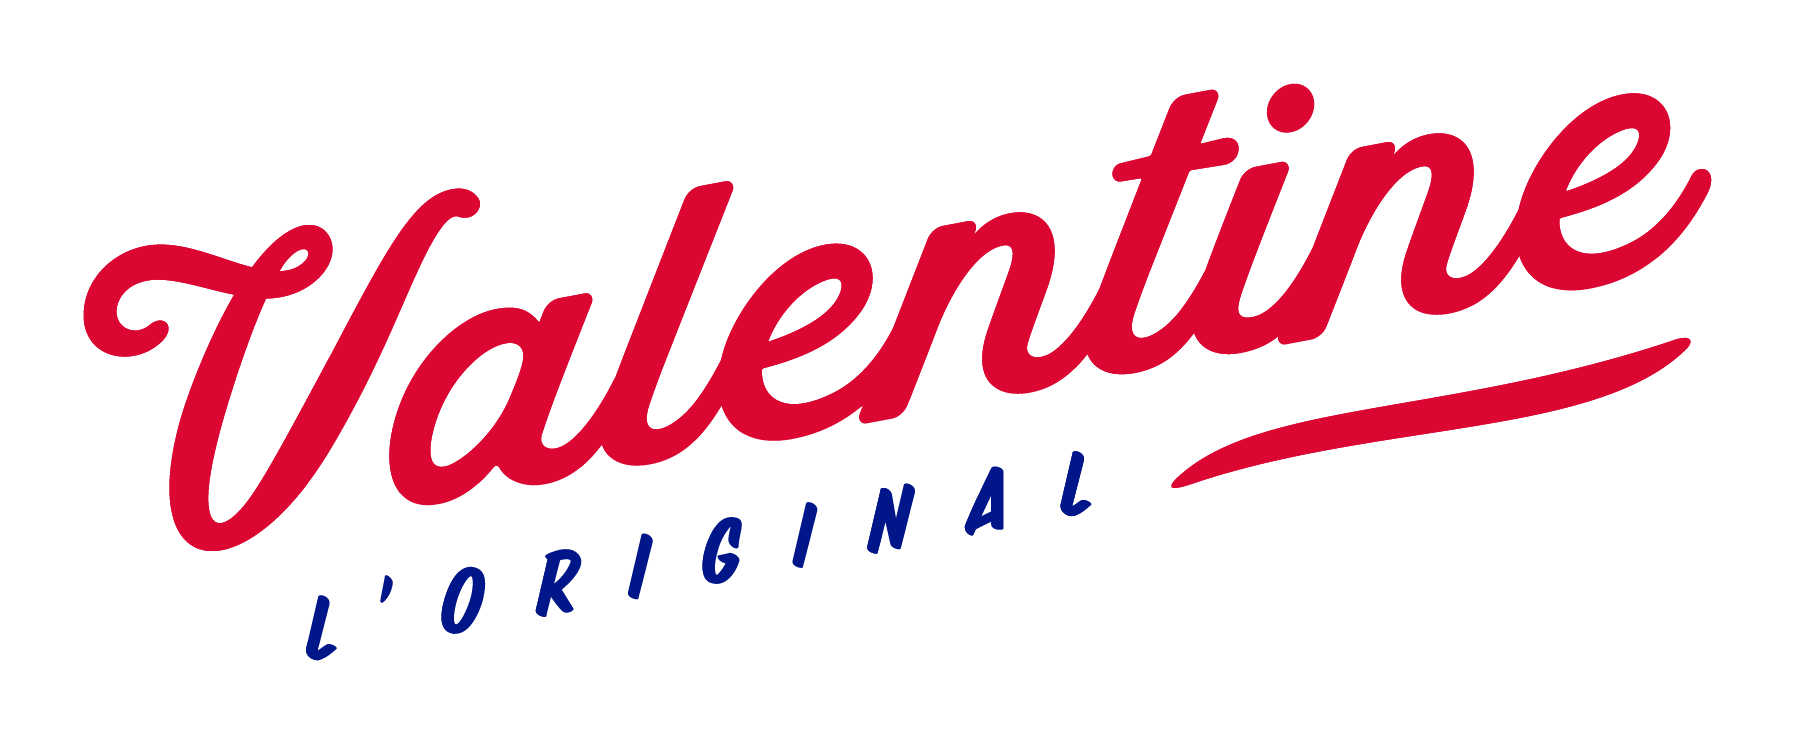 Valentine's logo